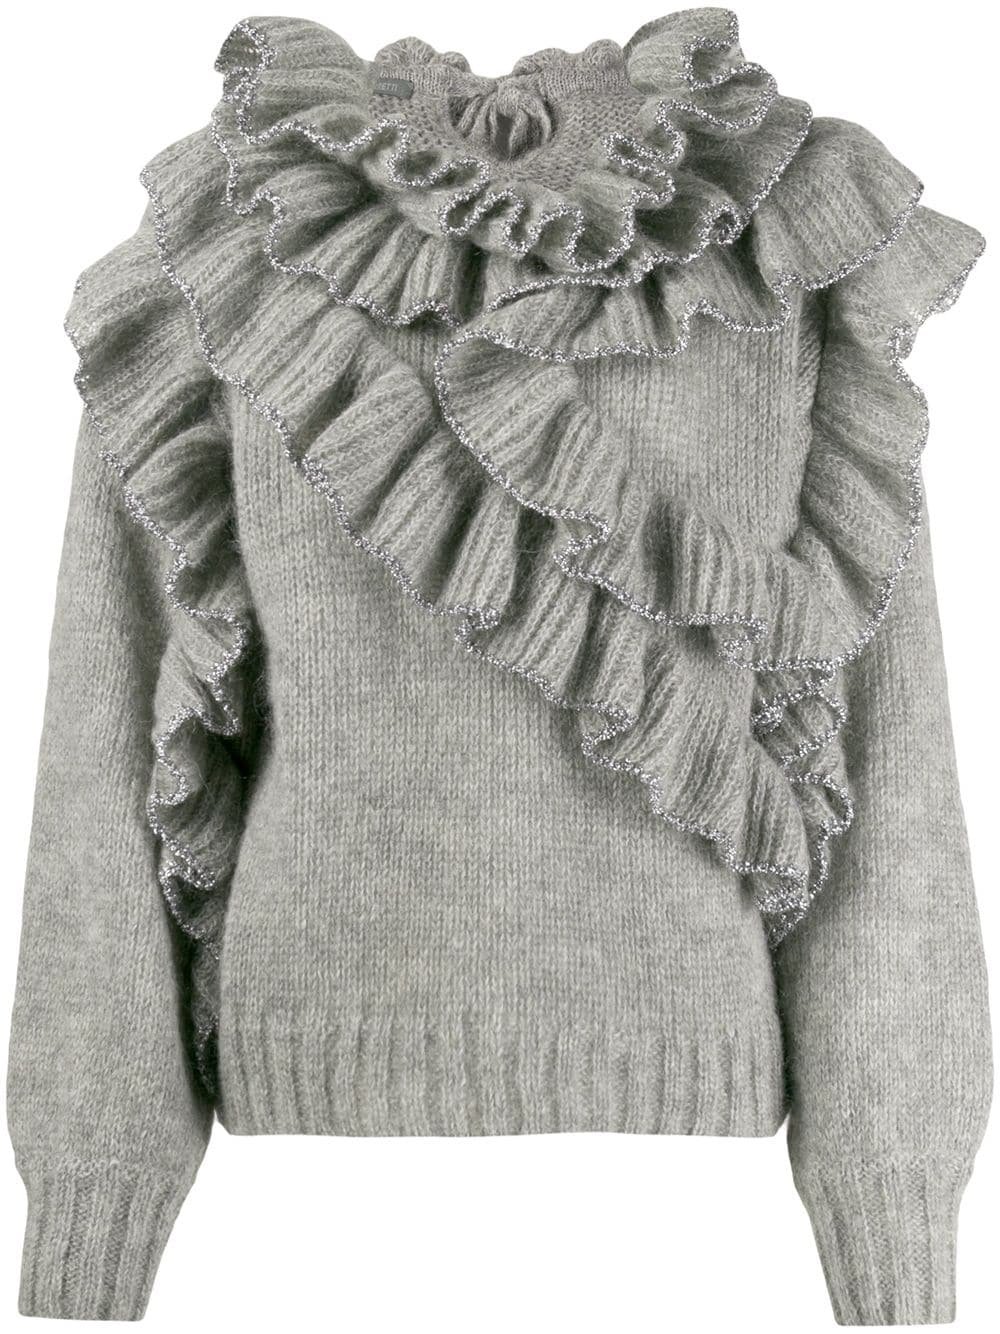 Кофта с рюшами. Alberta Ferretti Sweater Knit. Sweater – Alberta Ferretti. Alberta Ferretti Sweater Knit Mohair. Джемпер с воланами.